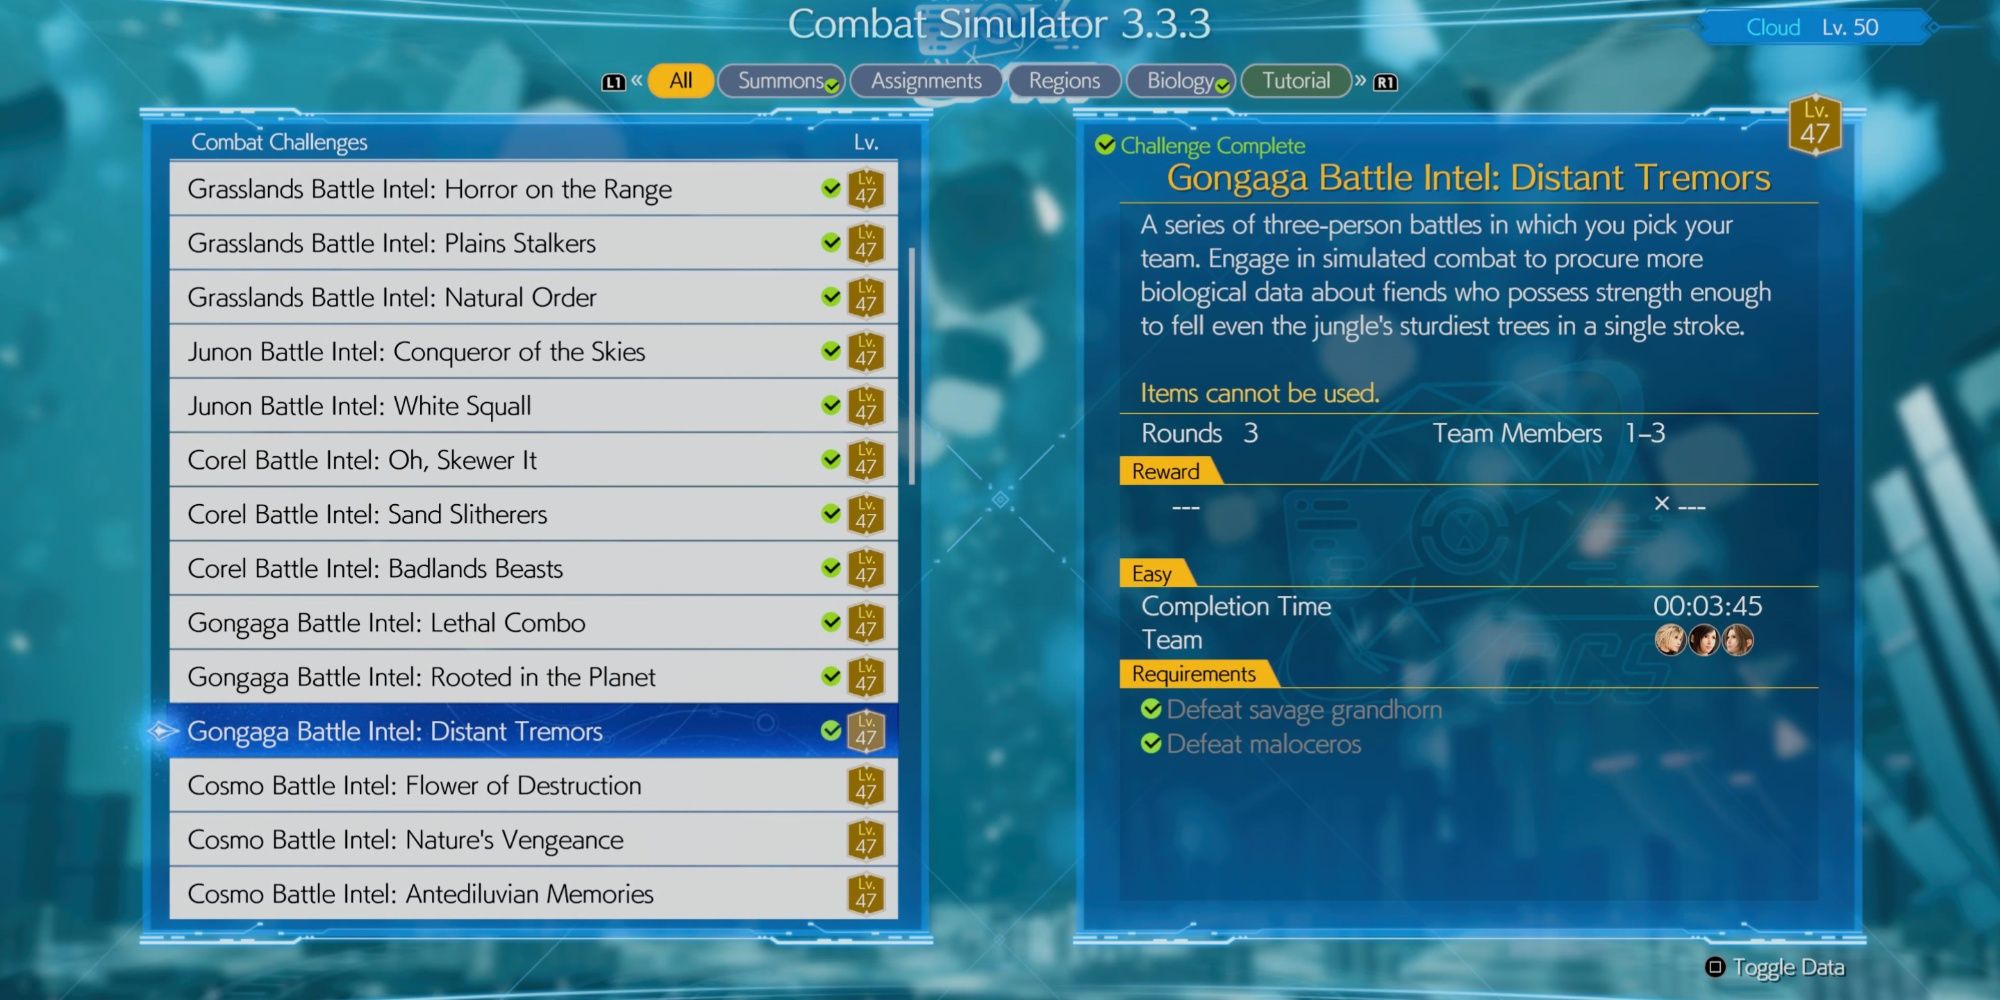 Combat Simulator 3.3.3 in Final Fantasy 7 Rebirth